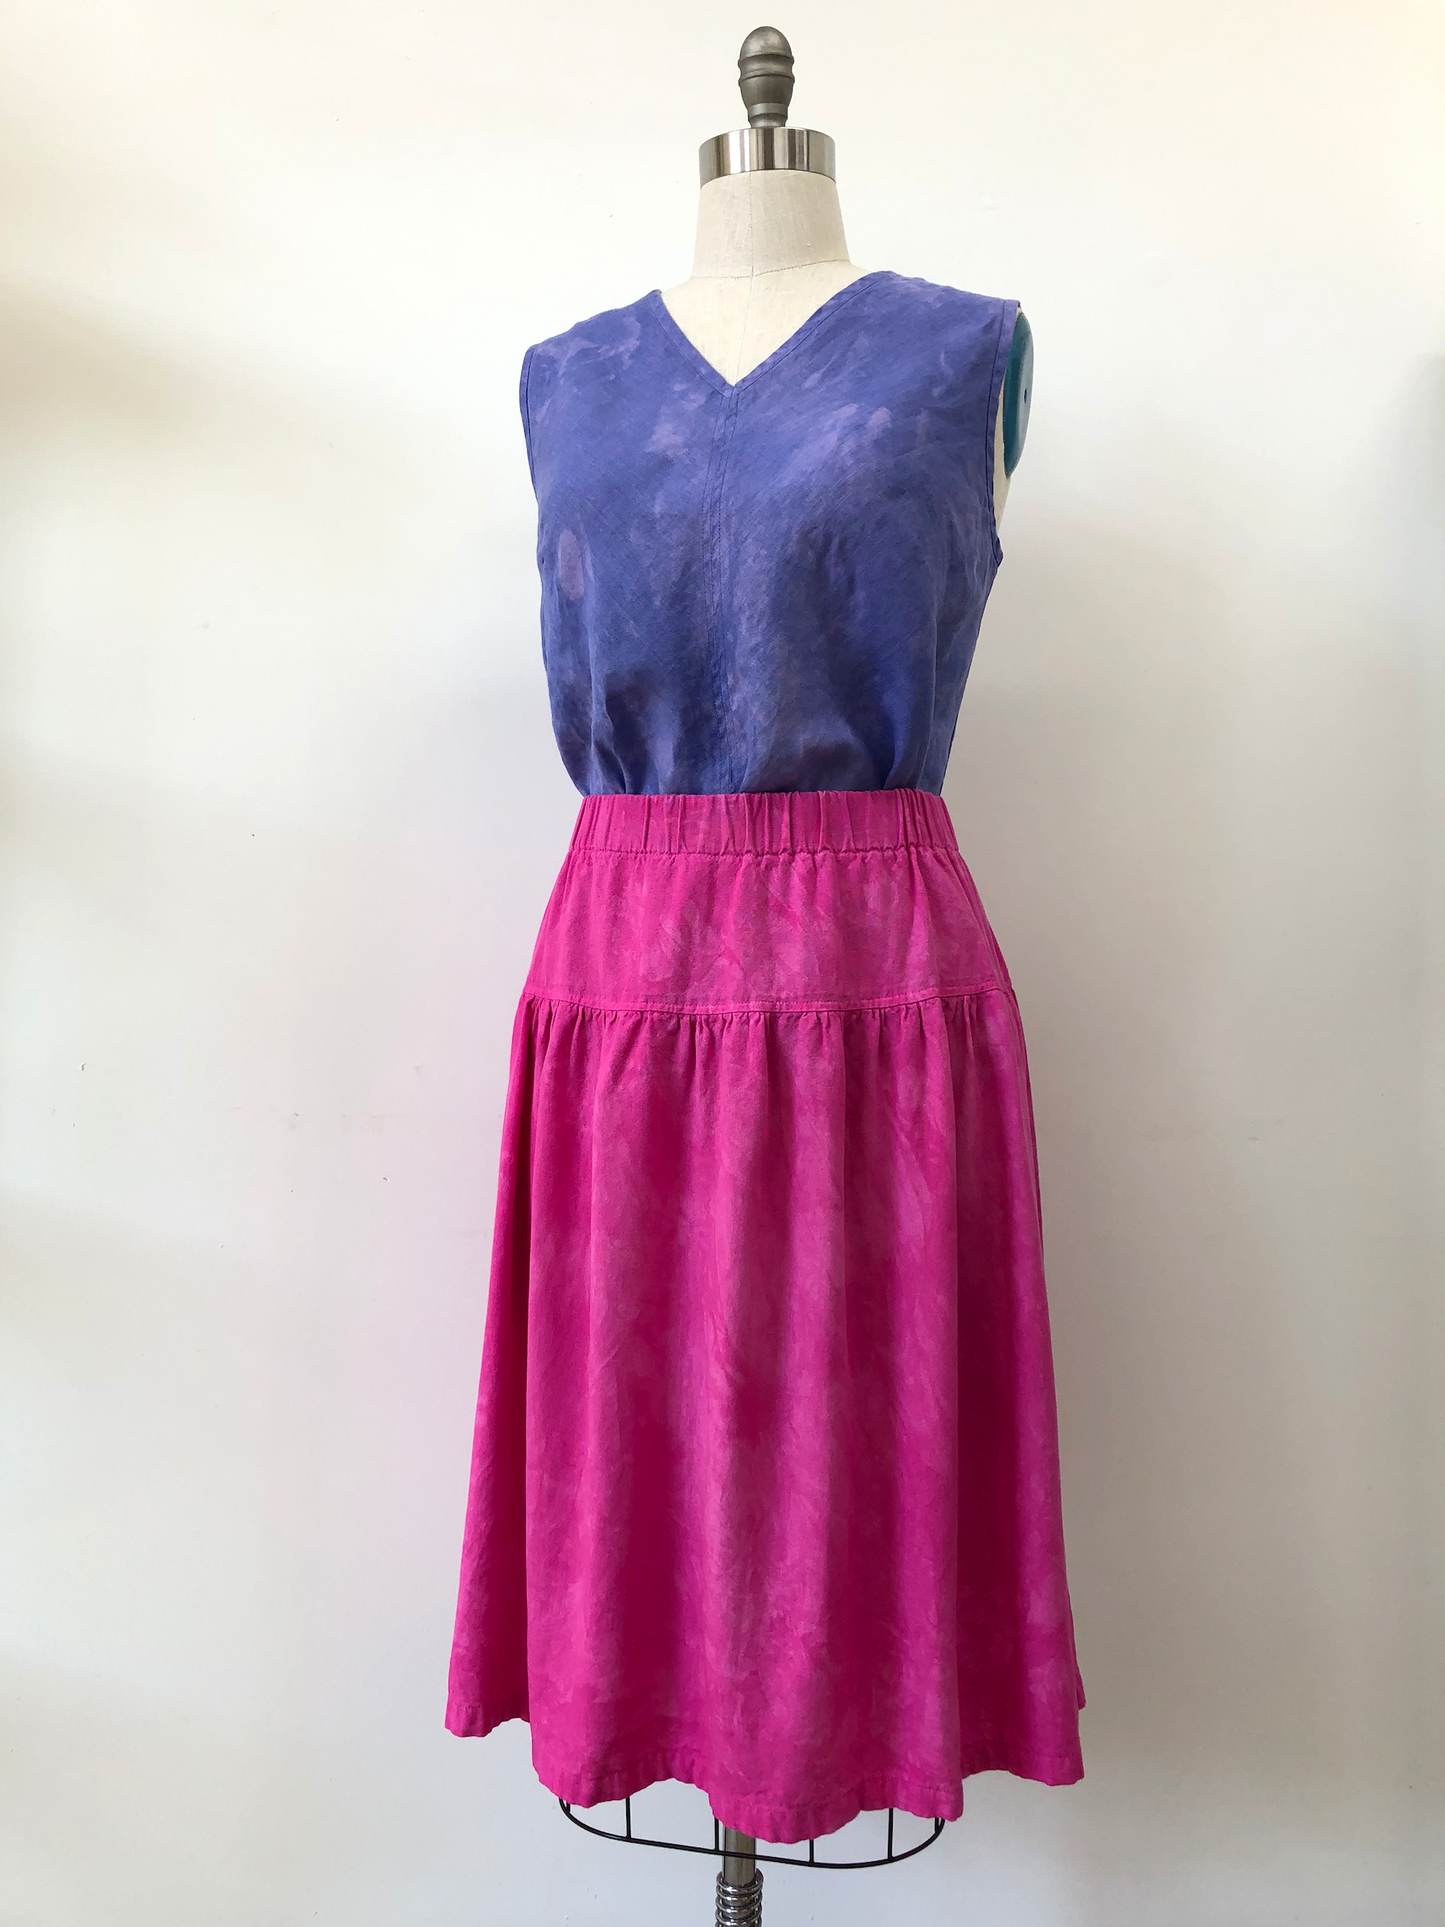 Petticoat Skirt - Choose Your Color